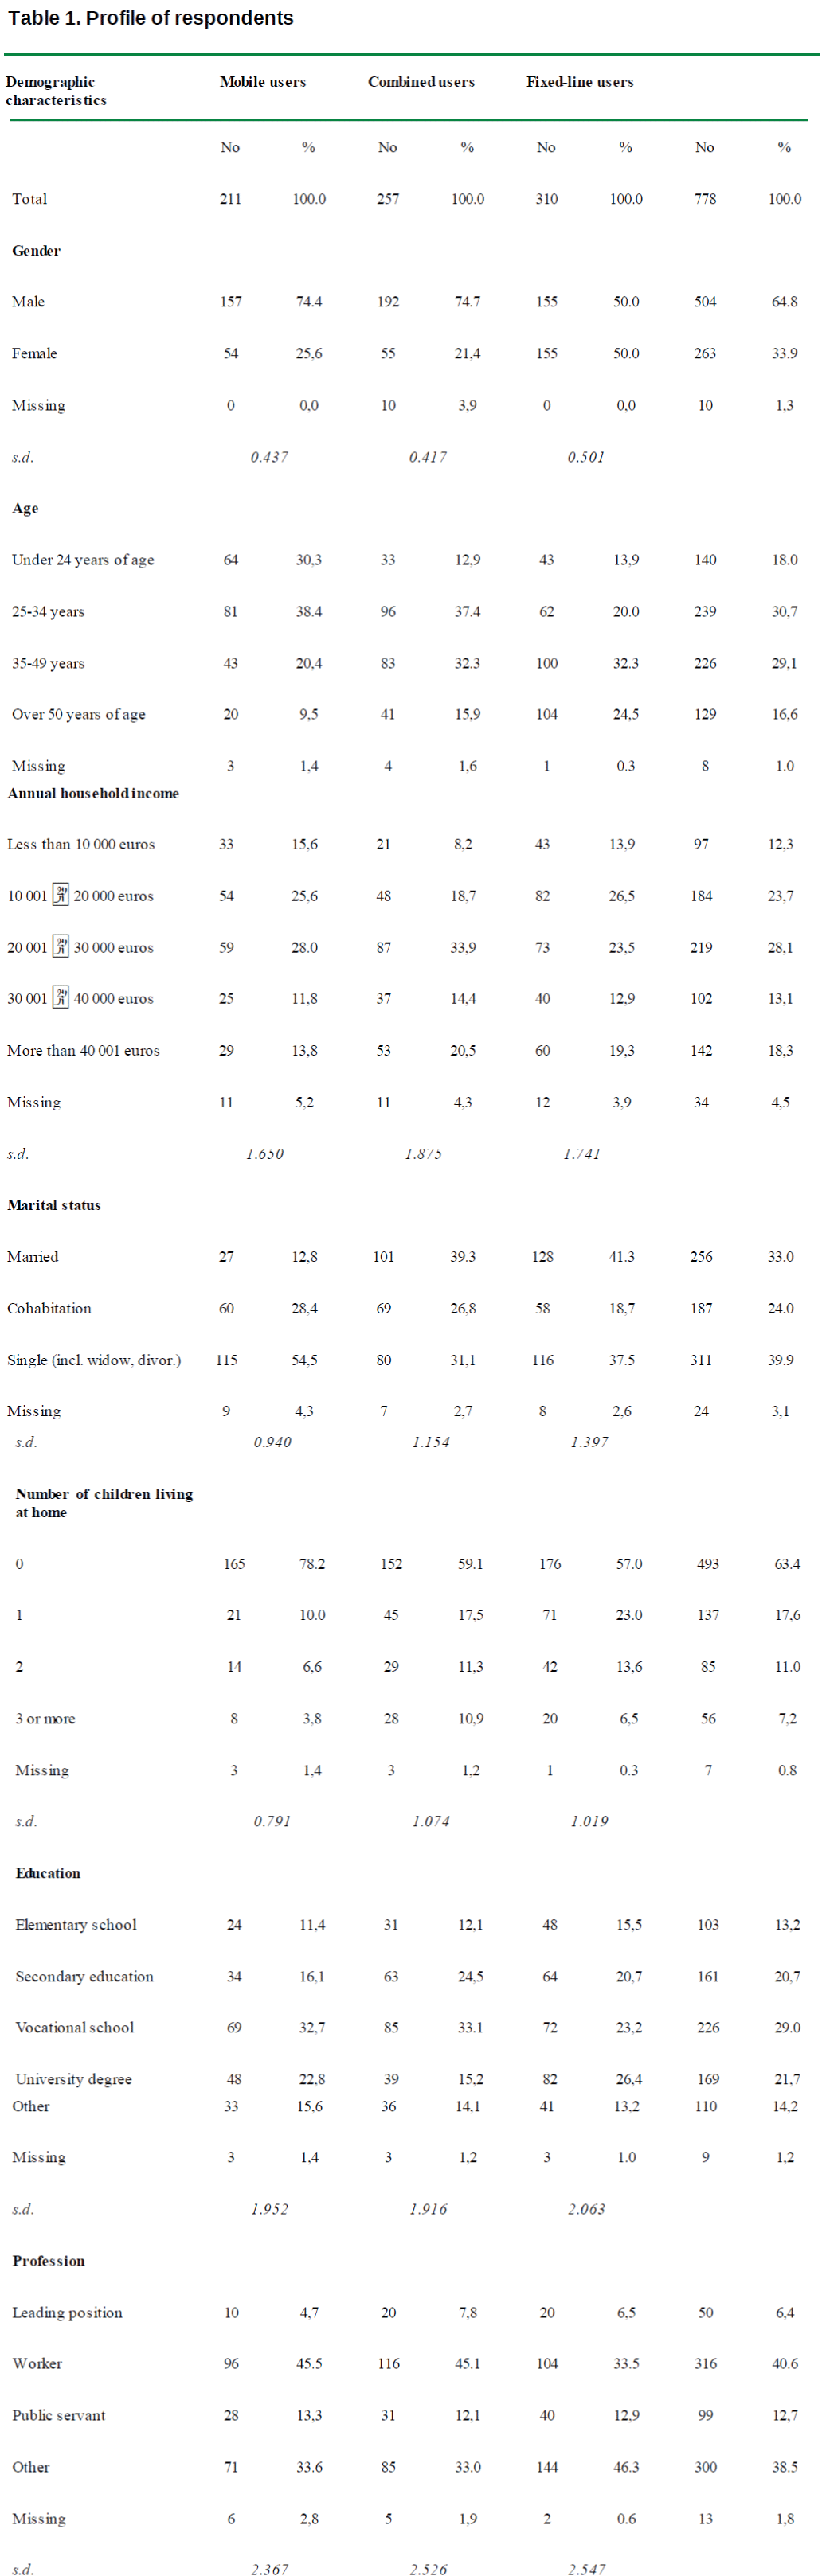 icommercecentral-Profile-respondents